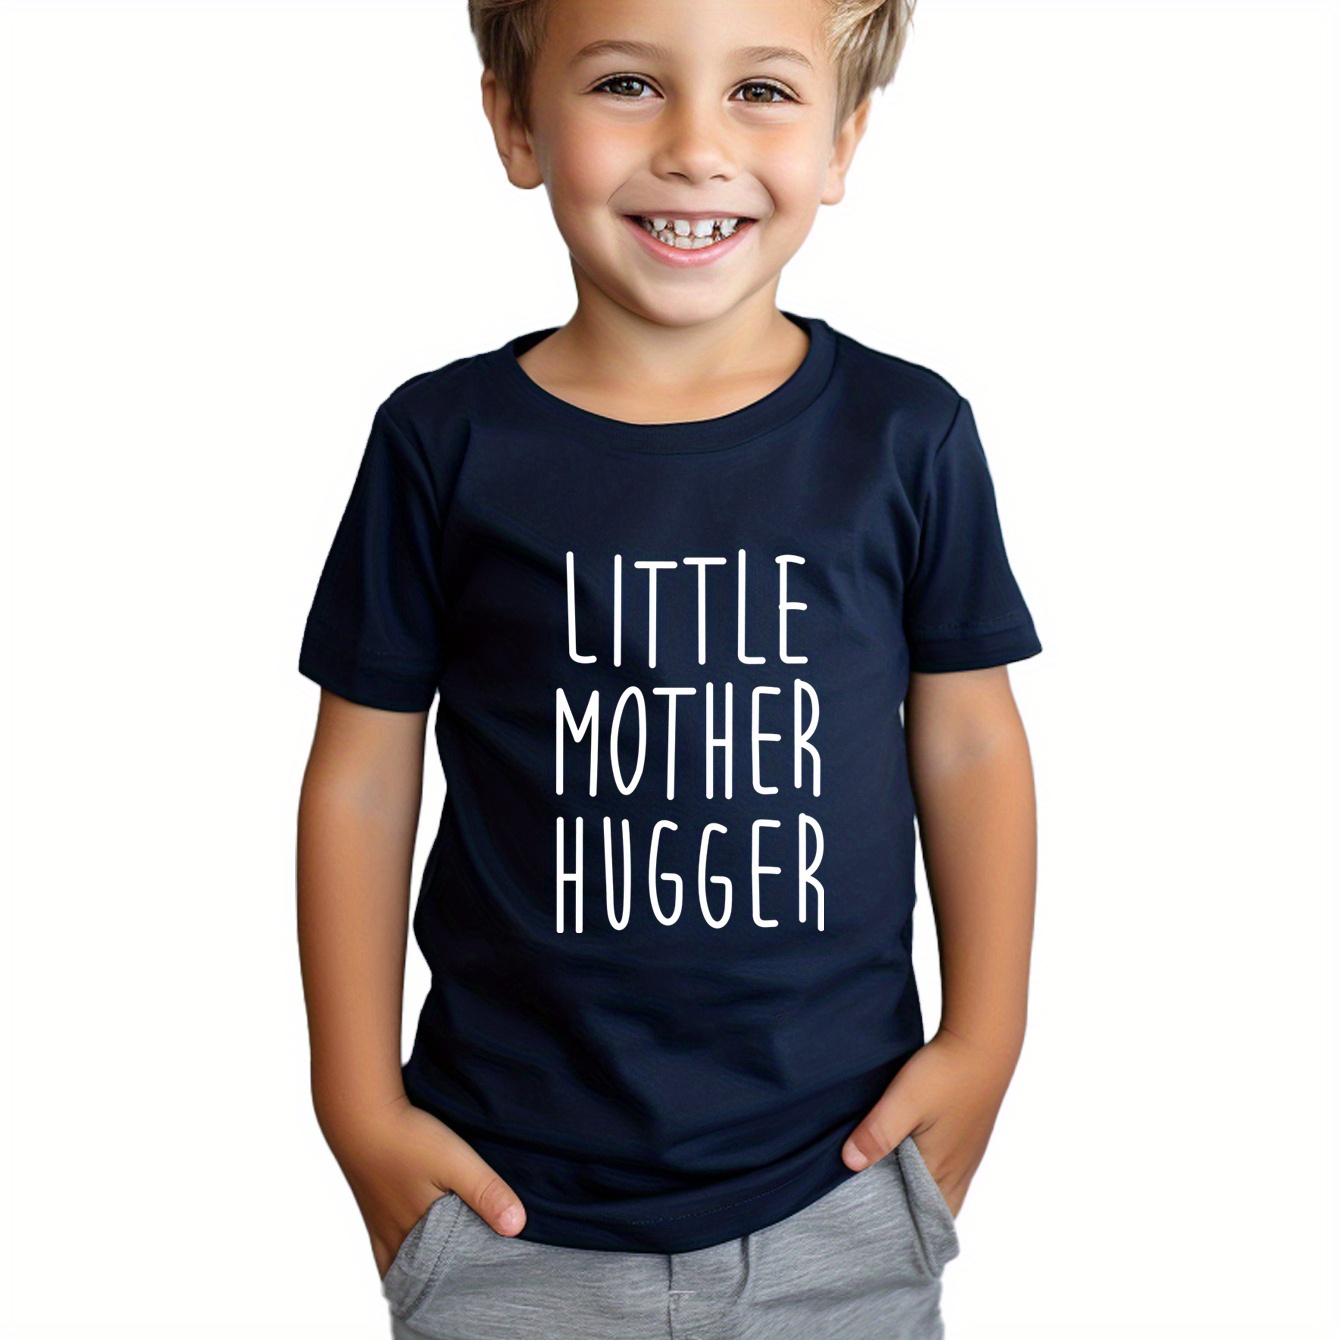 

Little Mother Hugger Print Boy's T-shirt, Kids Casual Short Sleeve Breathable Comfortable Summer Outdoor Top